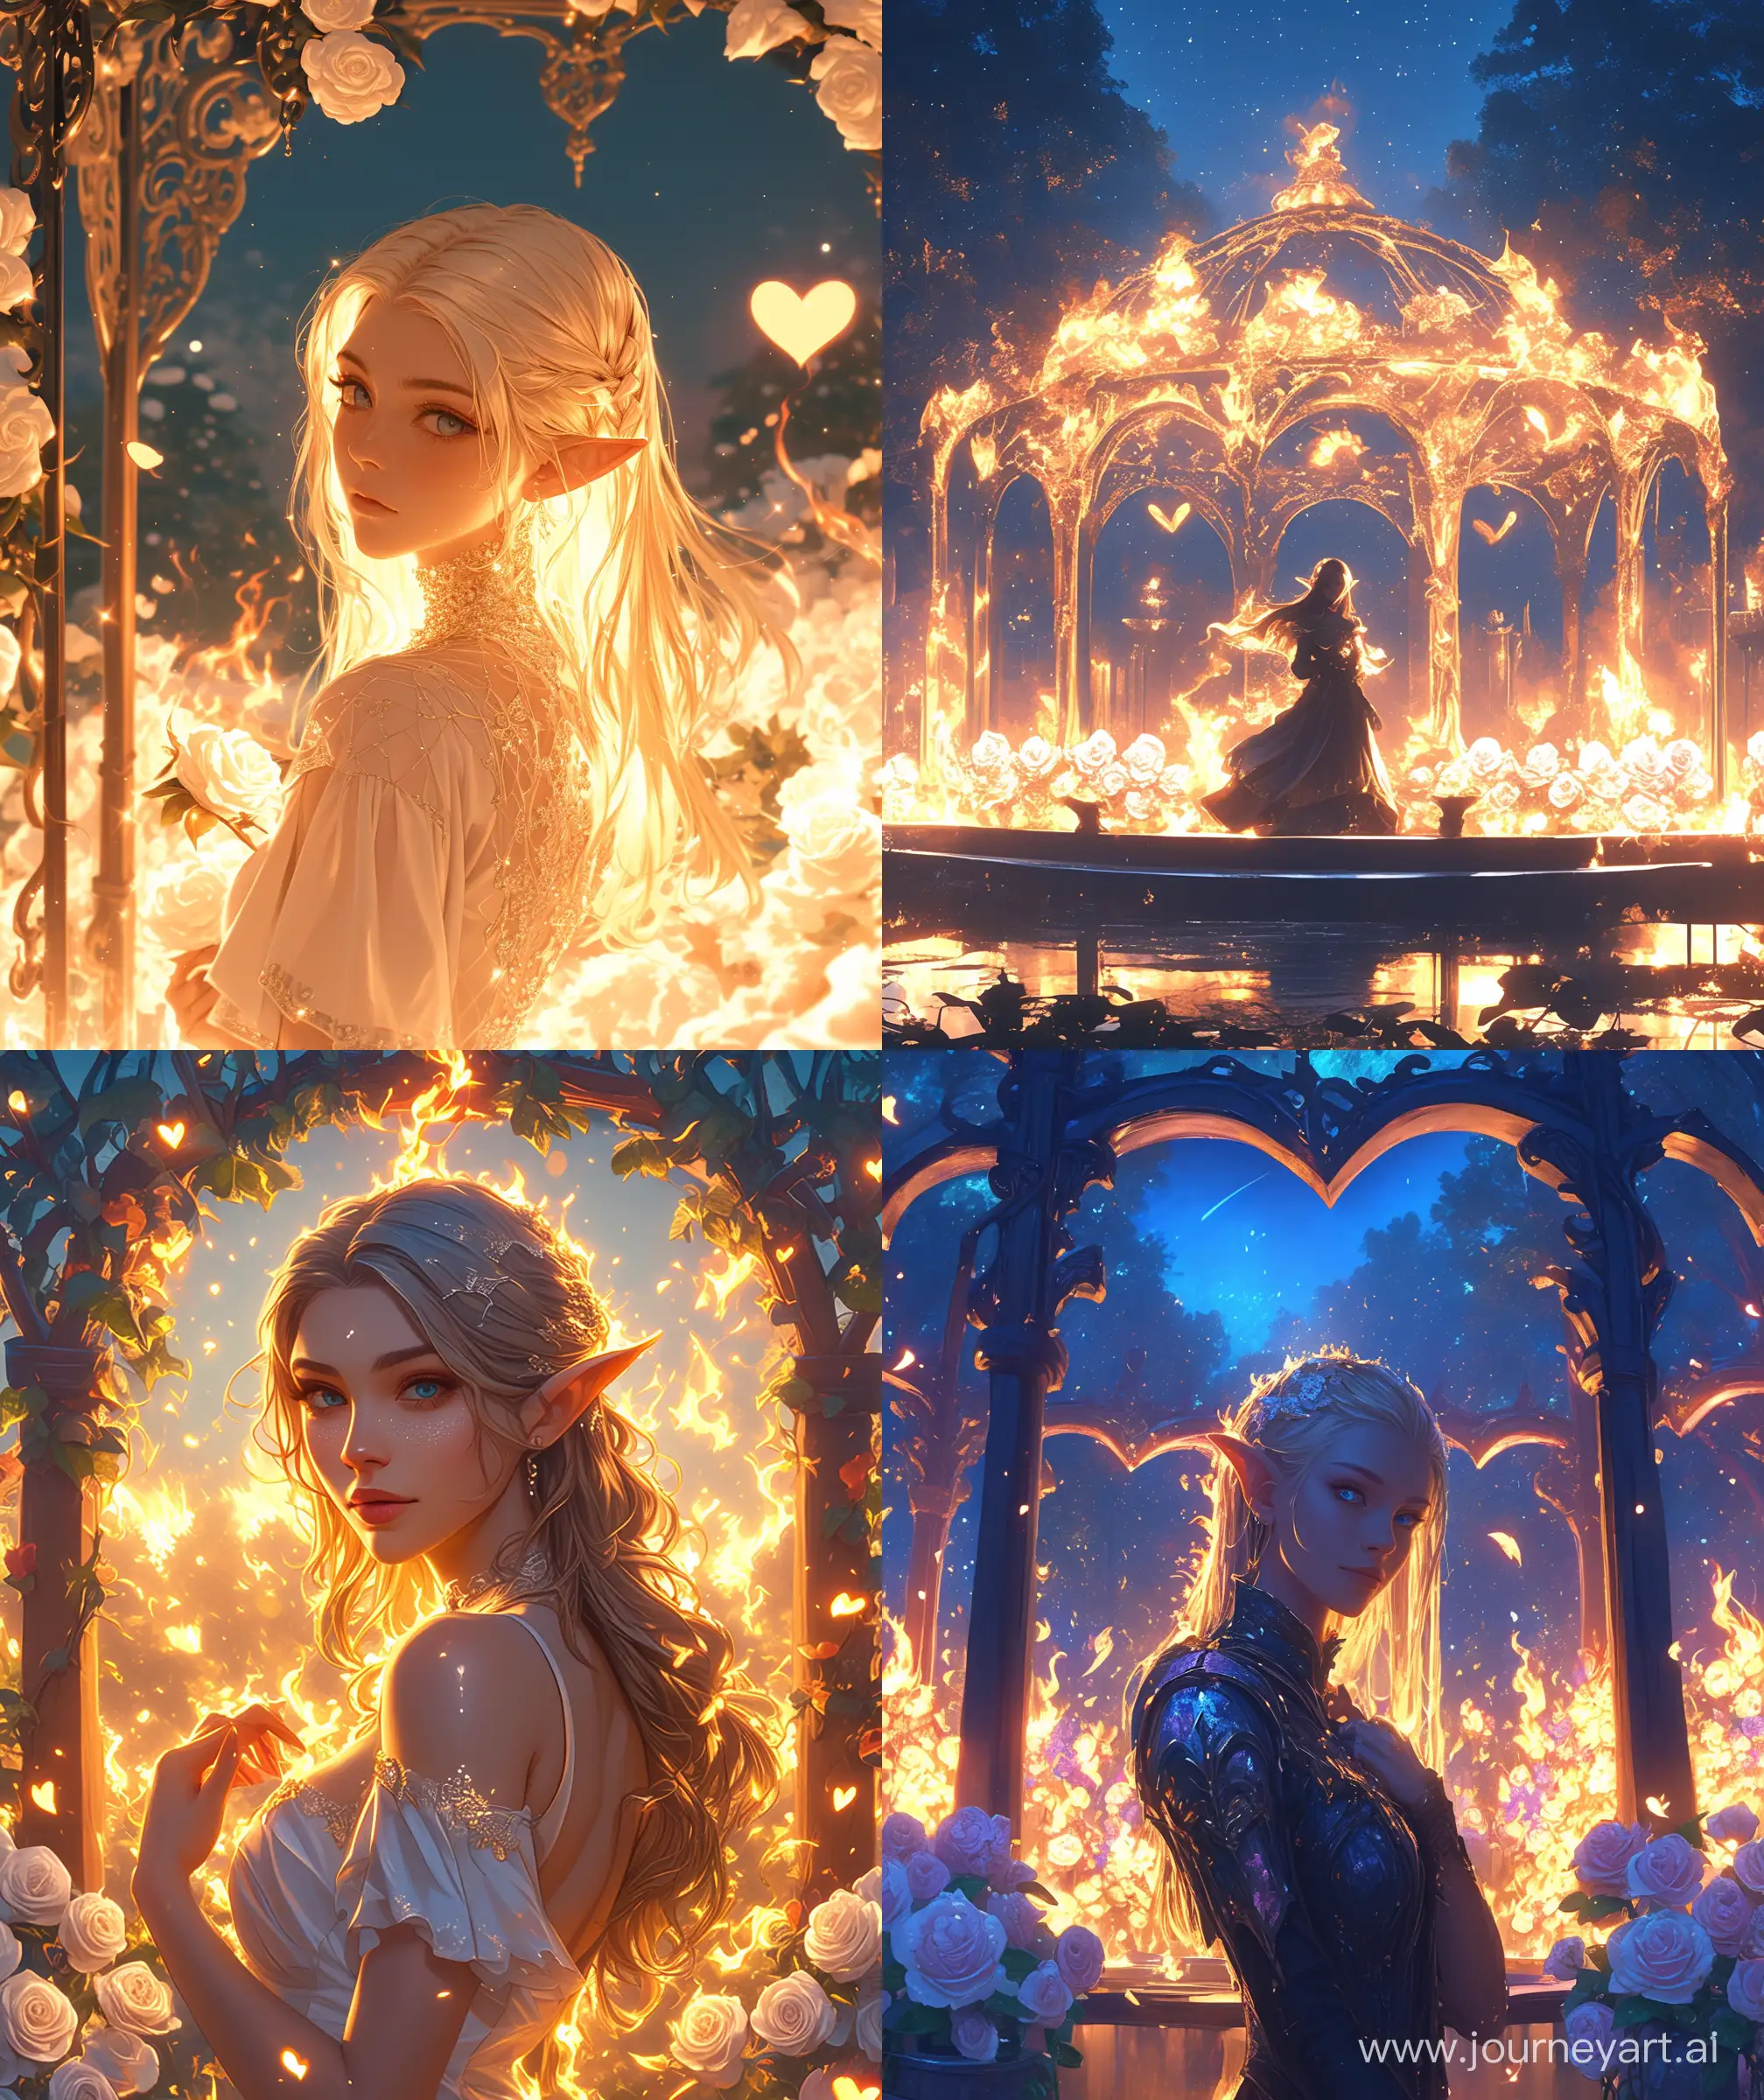 Enchanting-Elf-with-Burning-White-Roses-in-a-Mesmerizing-Flame-Gazebo